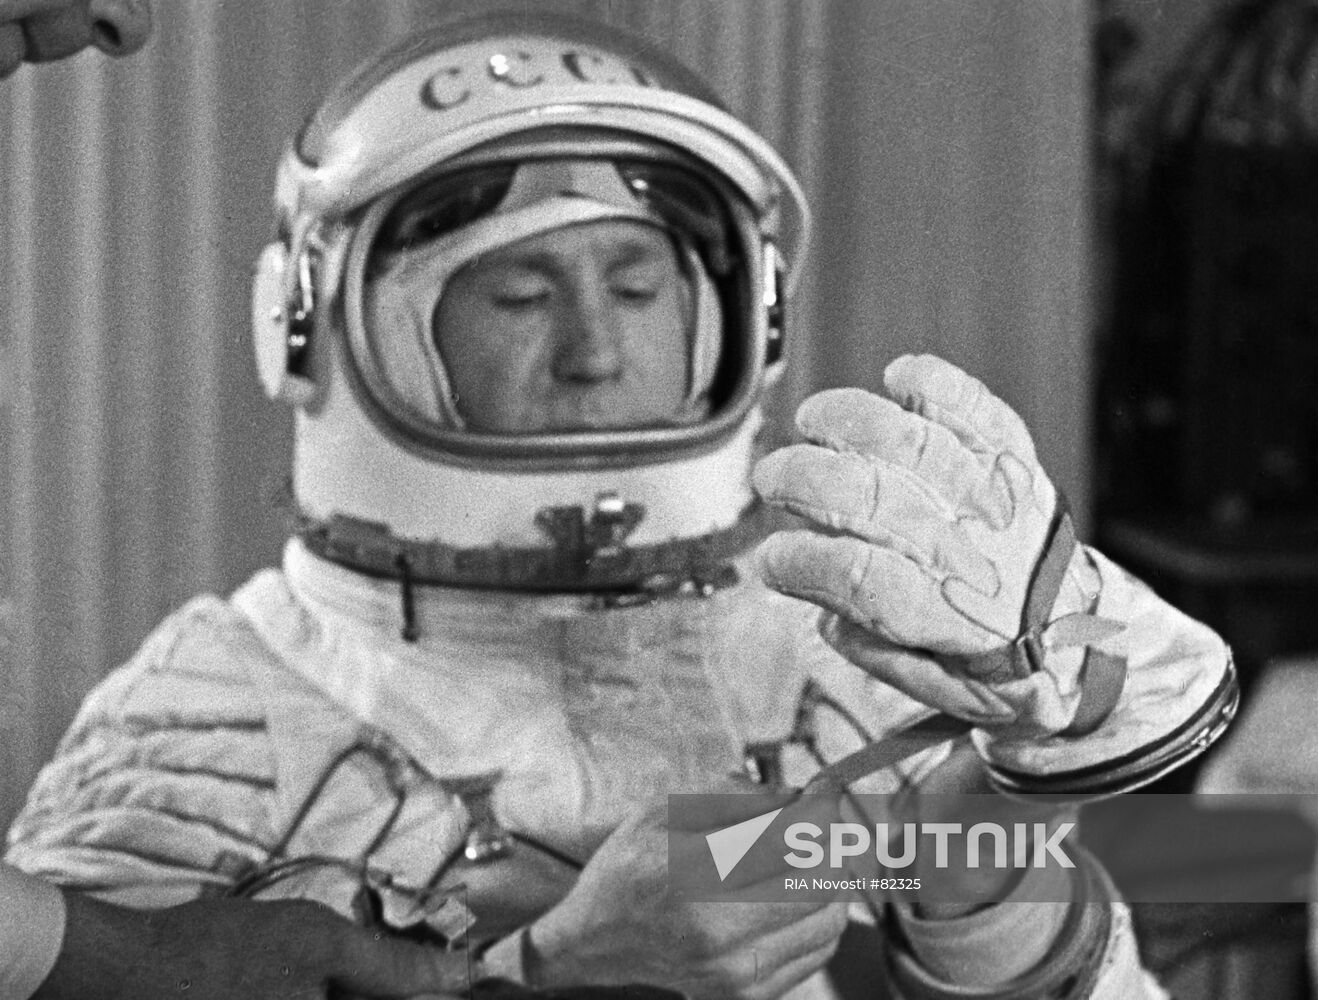 Spaceman Leonov at the Cosmonaut Training Center